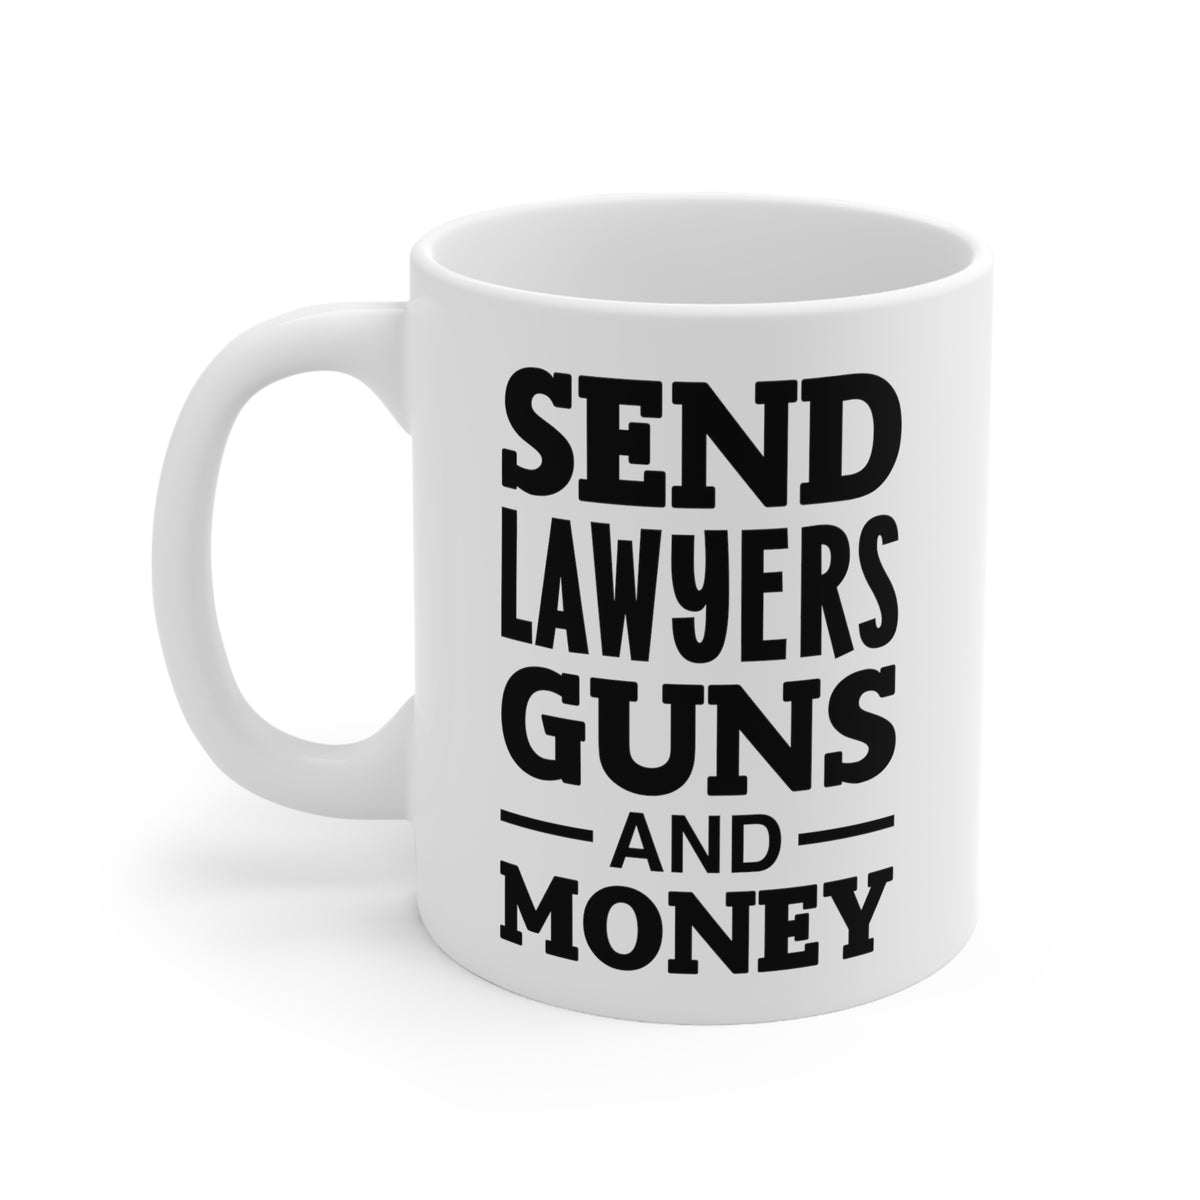 Send Lawyers Guns And Money Mug - Funny Lawyer Ceramic Coffee Cup